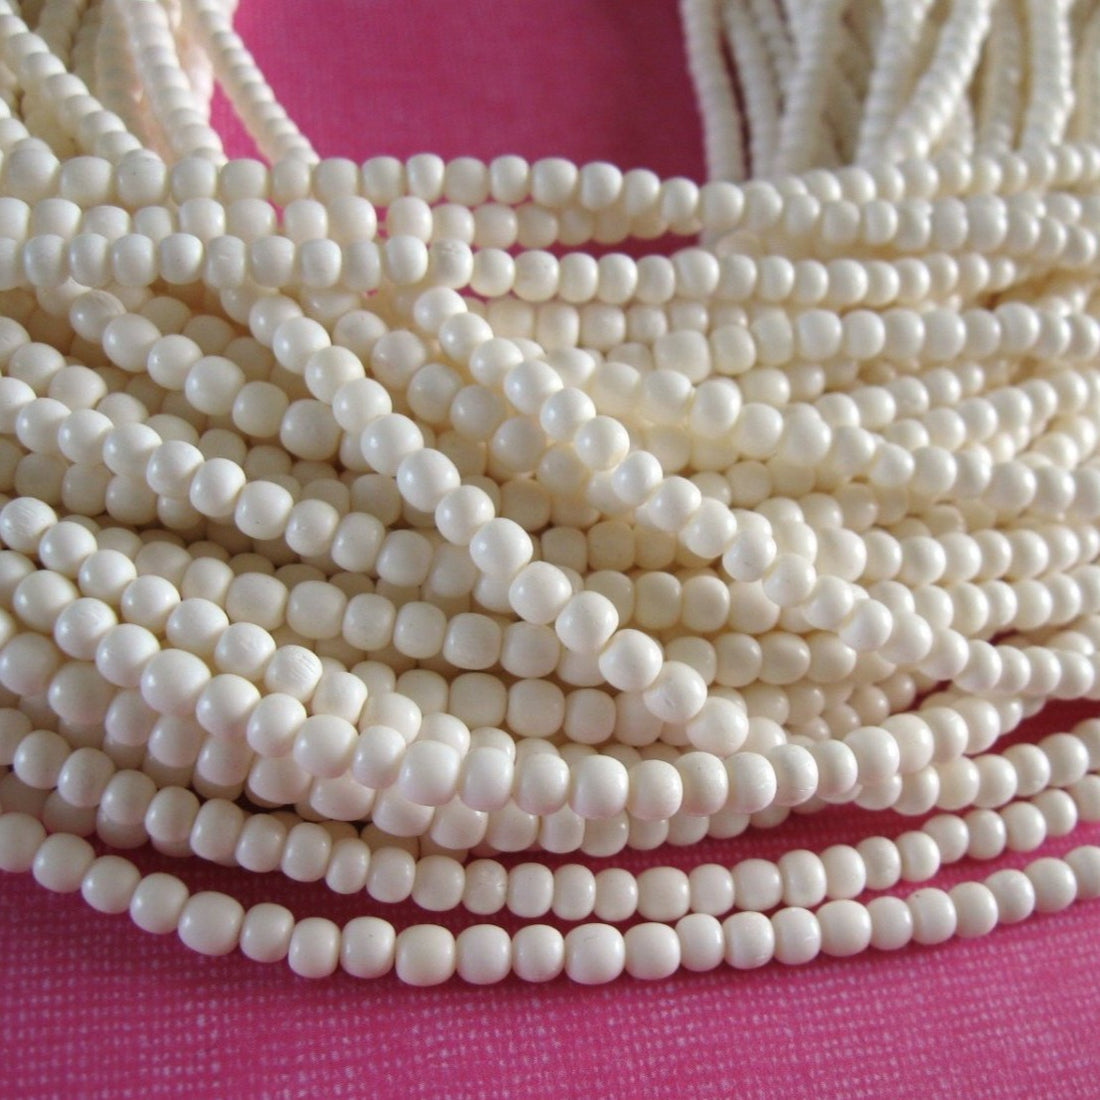 100 Perles rondes en os naturel blanc 3-4mm